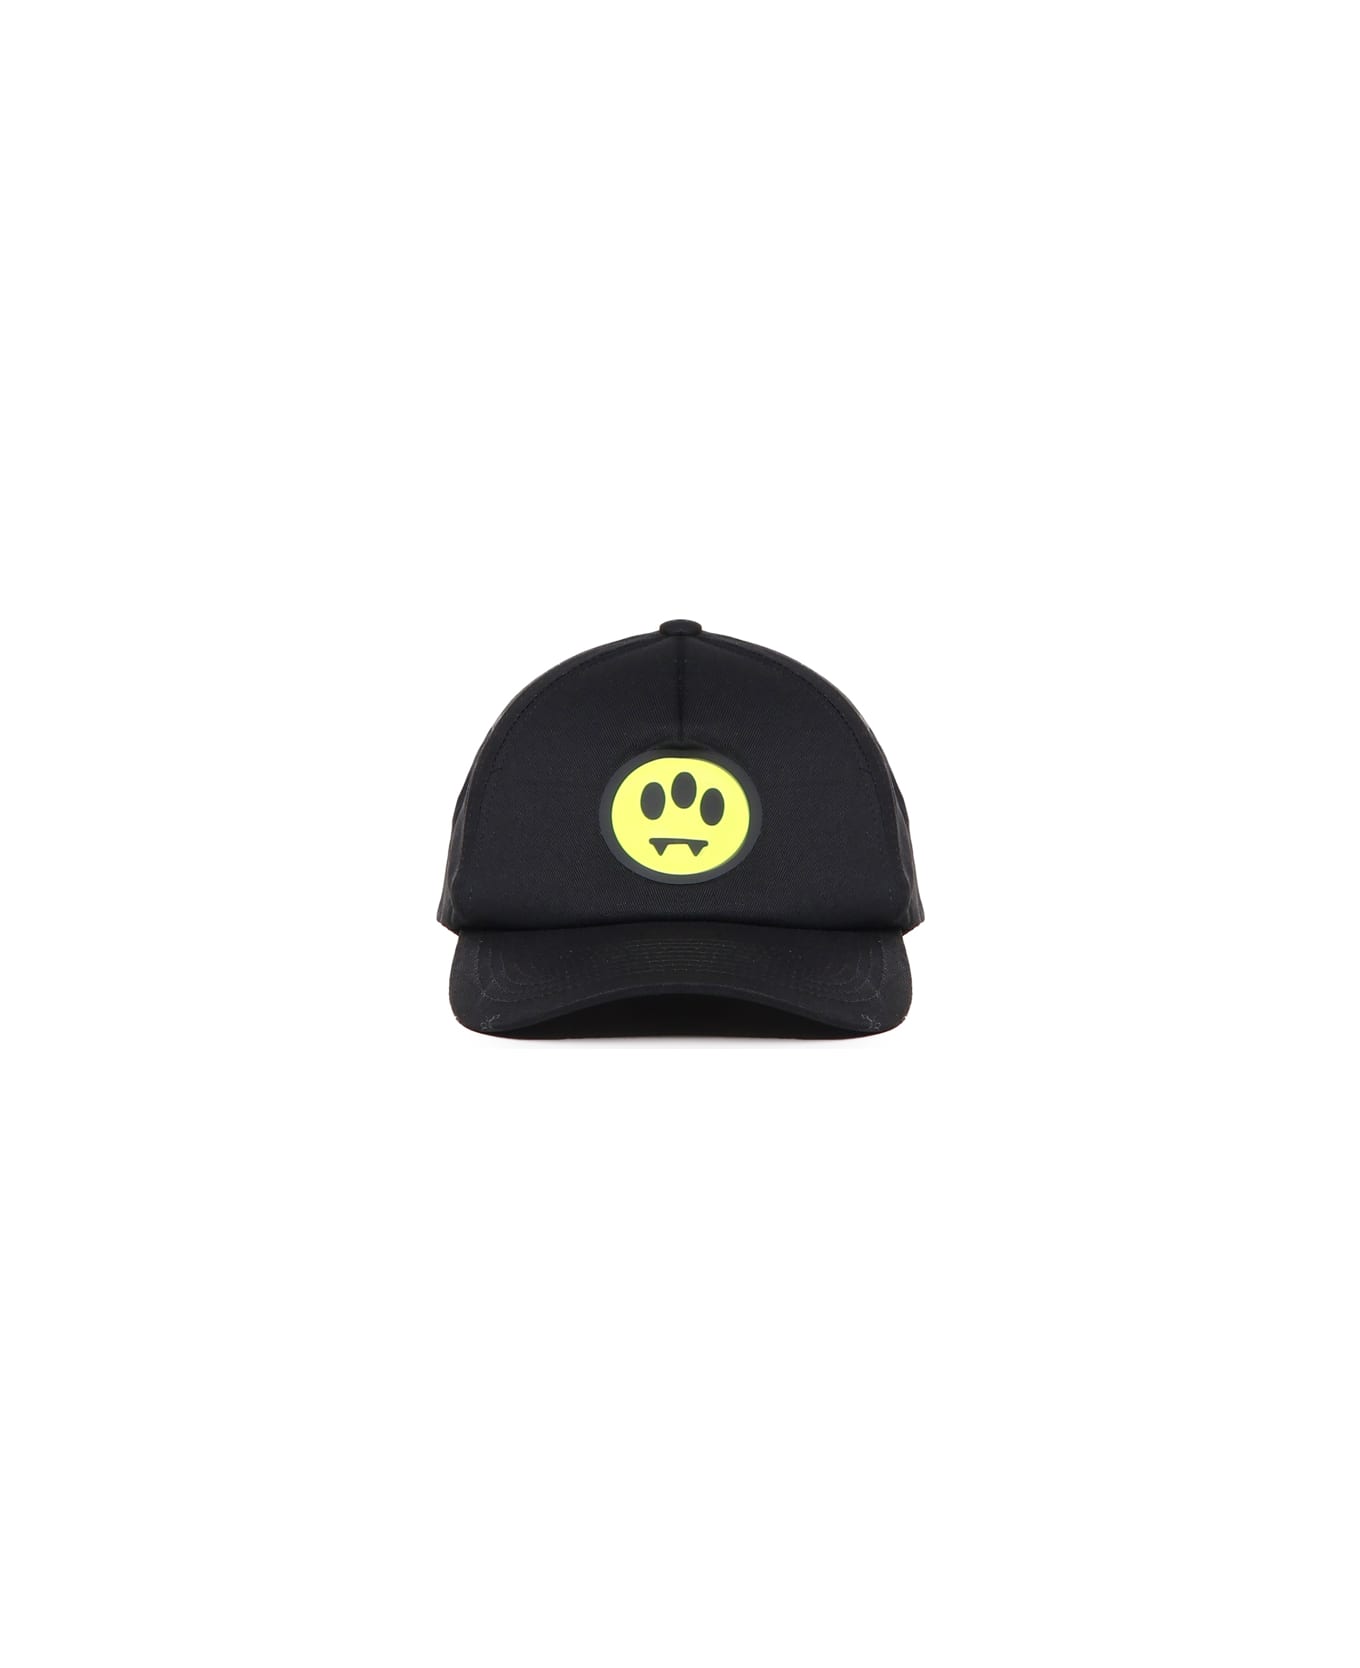 Barrow Logo Hat - Black